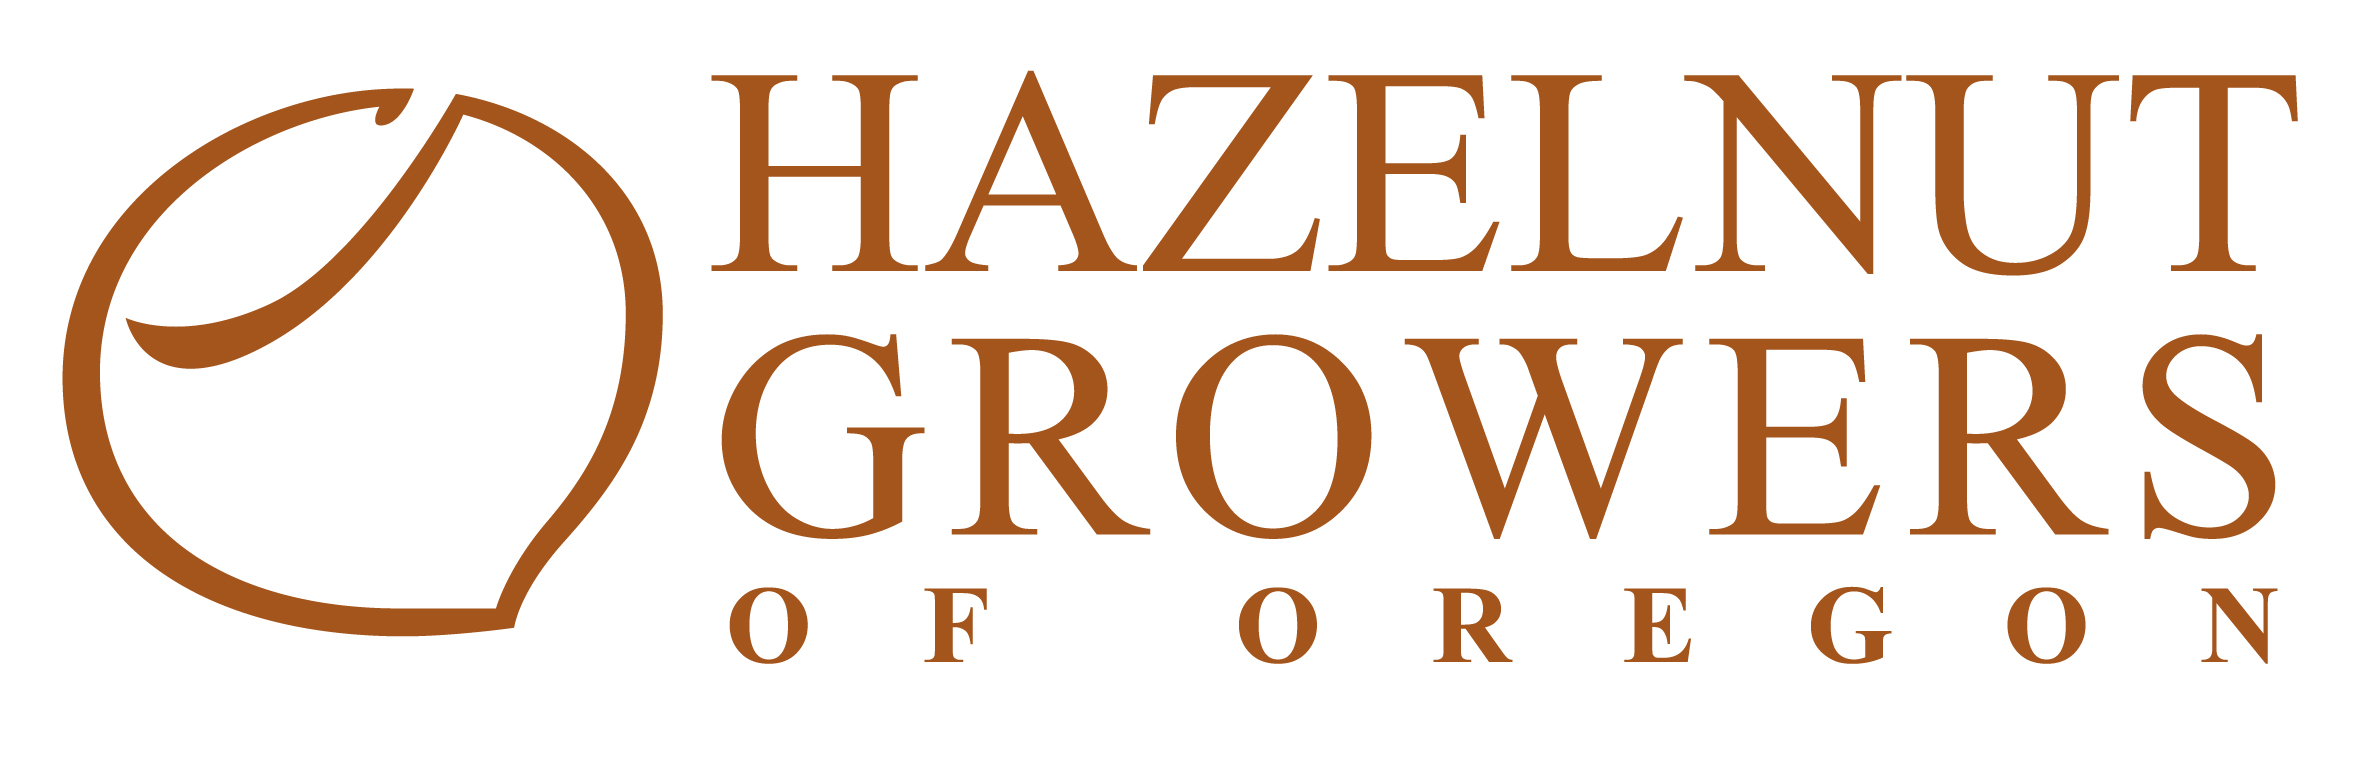 Hazelnut Growers of Oregon